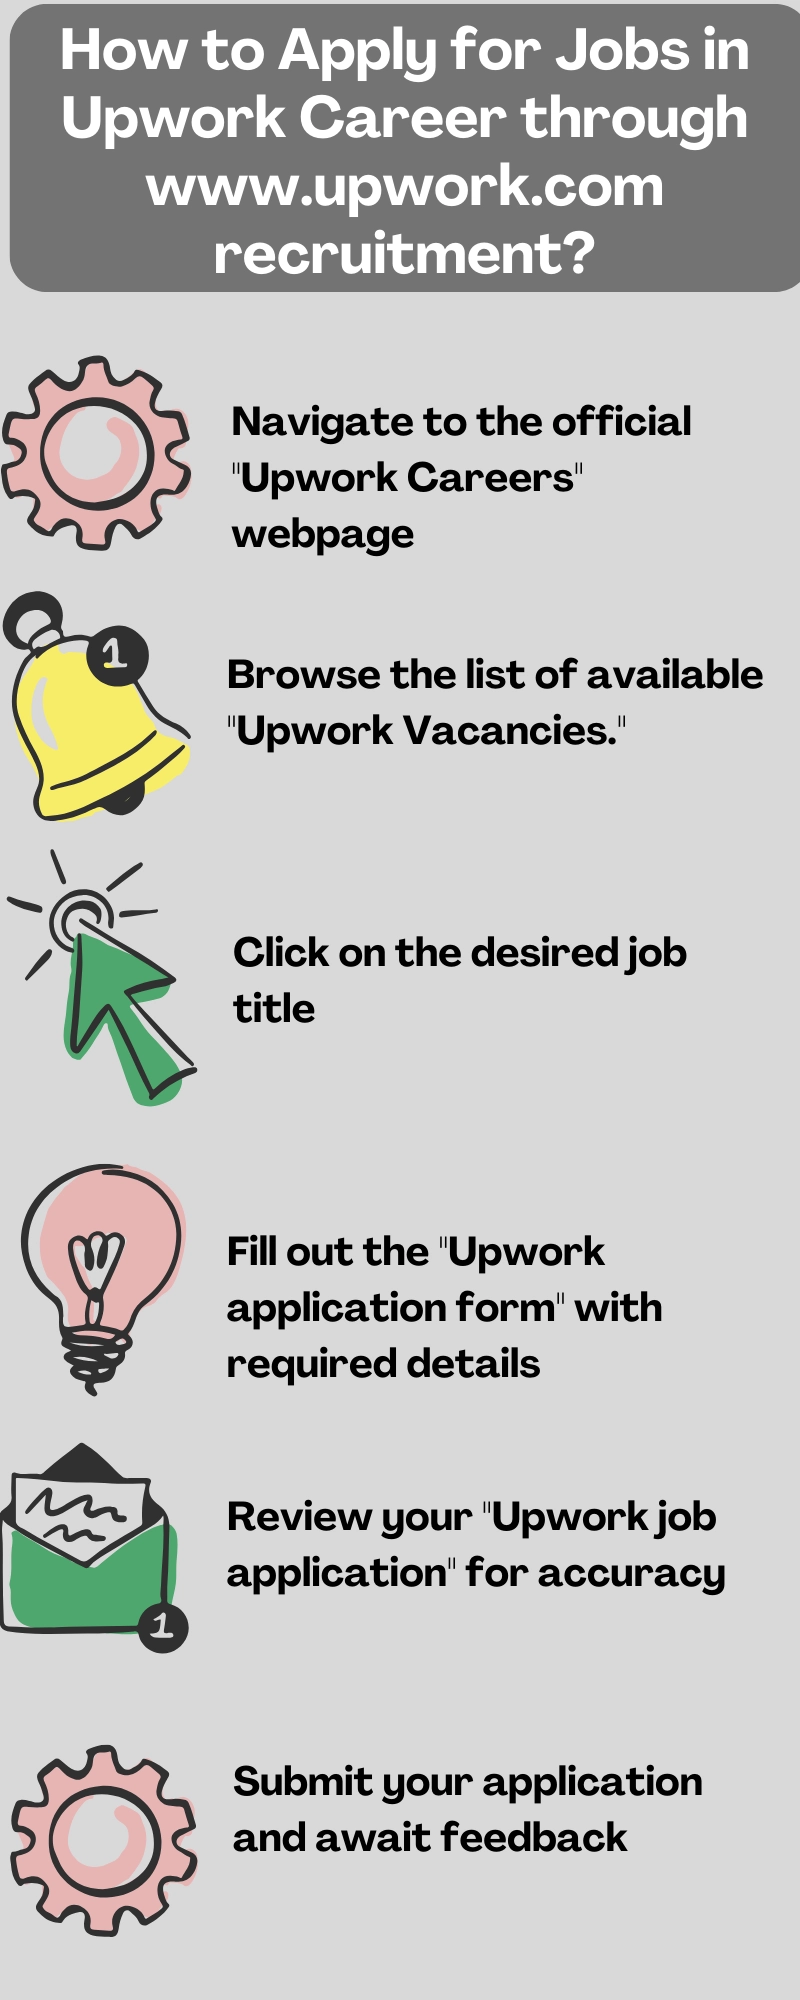 How to Apply for Jobs in Upwork Career through www.upwork.com recruitment?